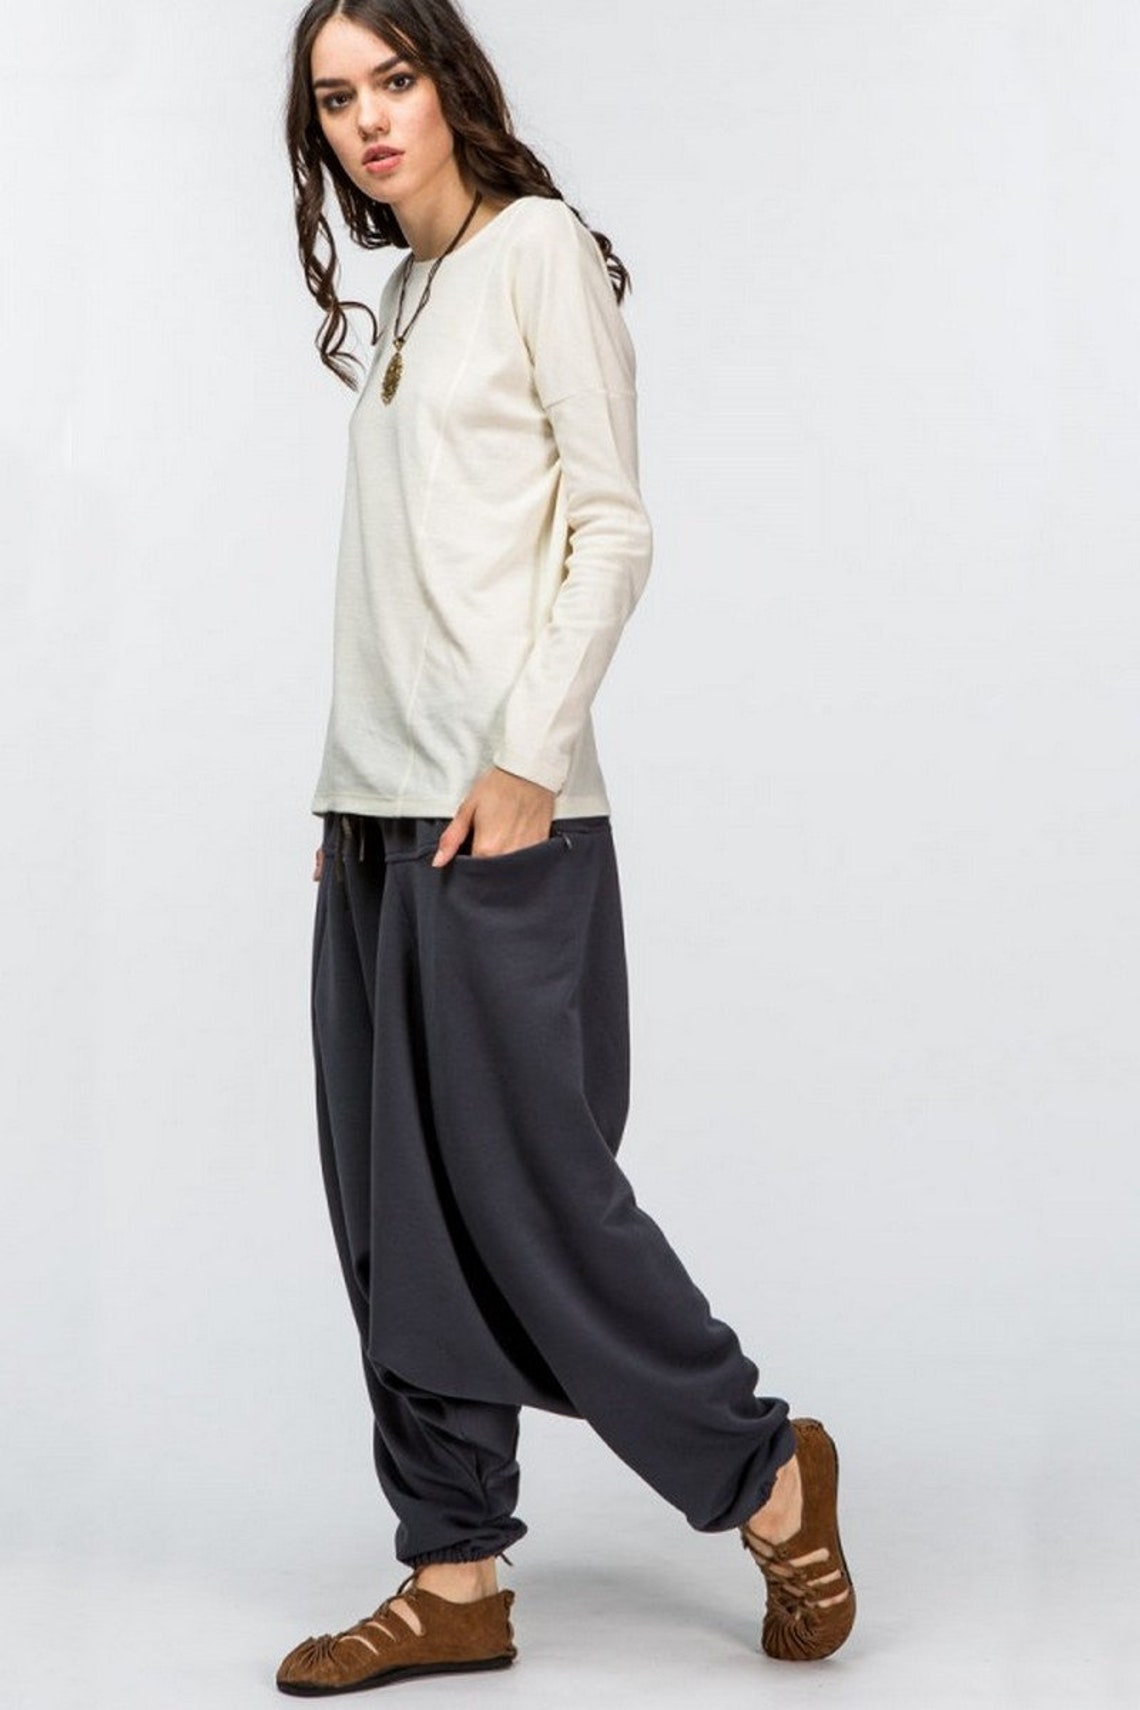 Hippie baggy ninja warm trousers women Boho Gray elastic | Etsy